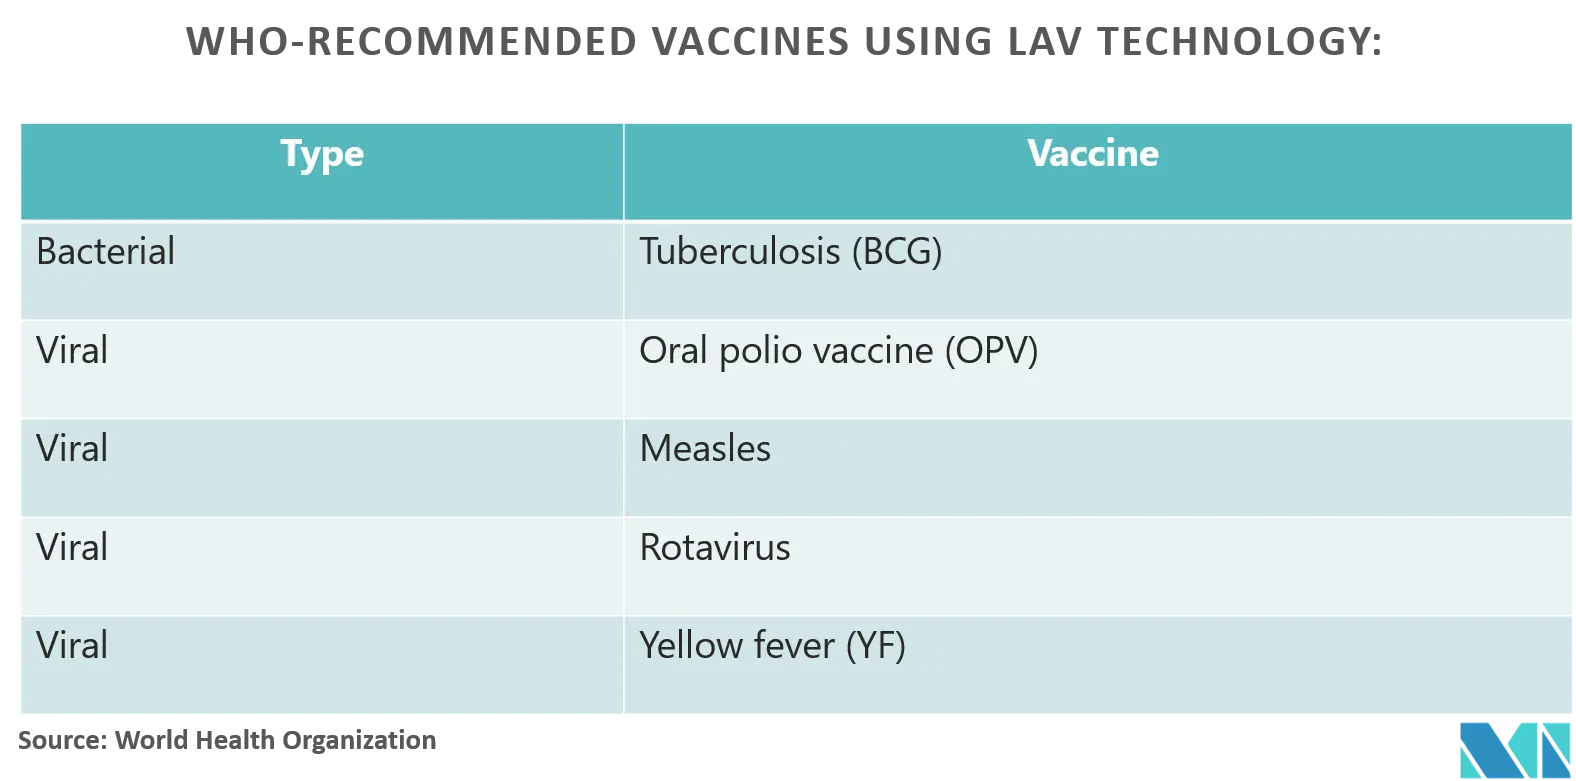 Pediatric Vaccines Market Key Trends